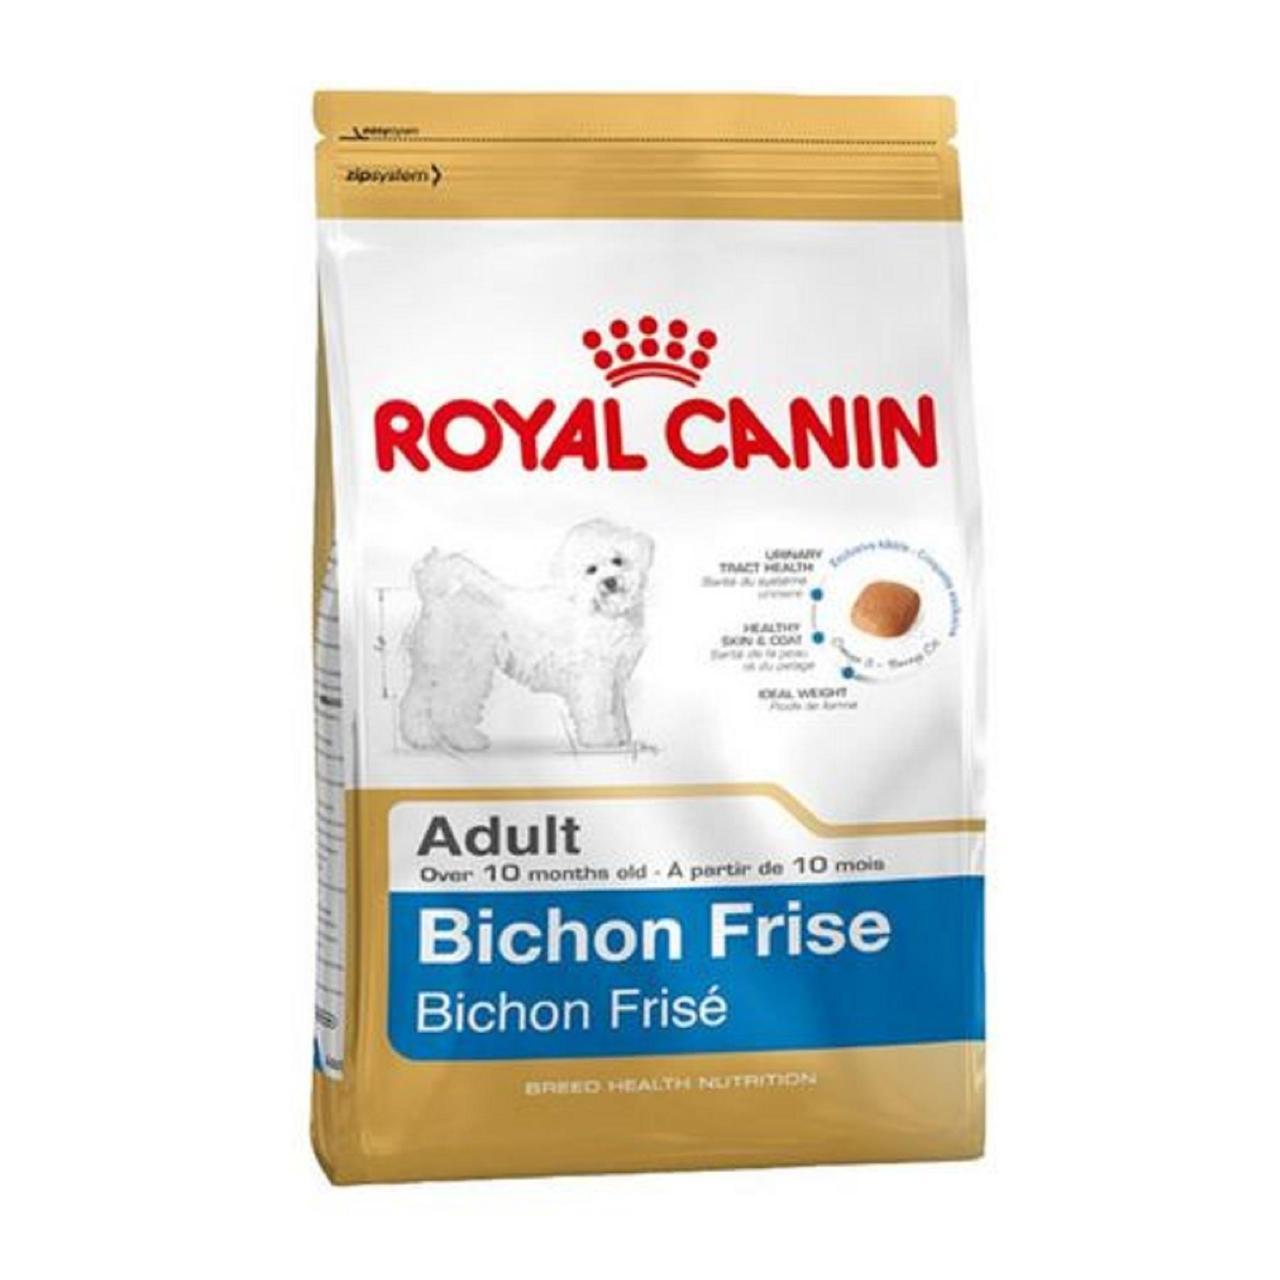 royal canin bichon frise